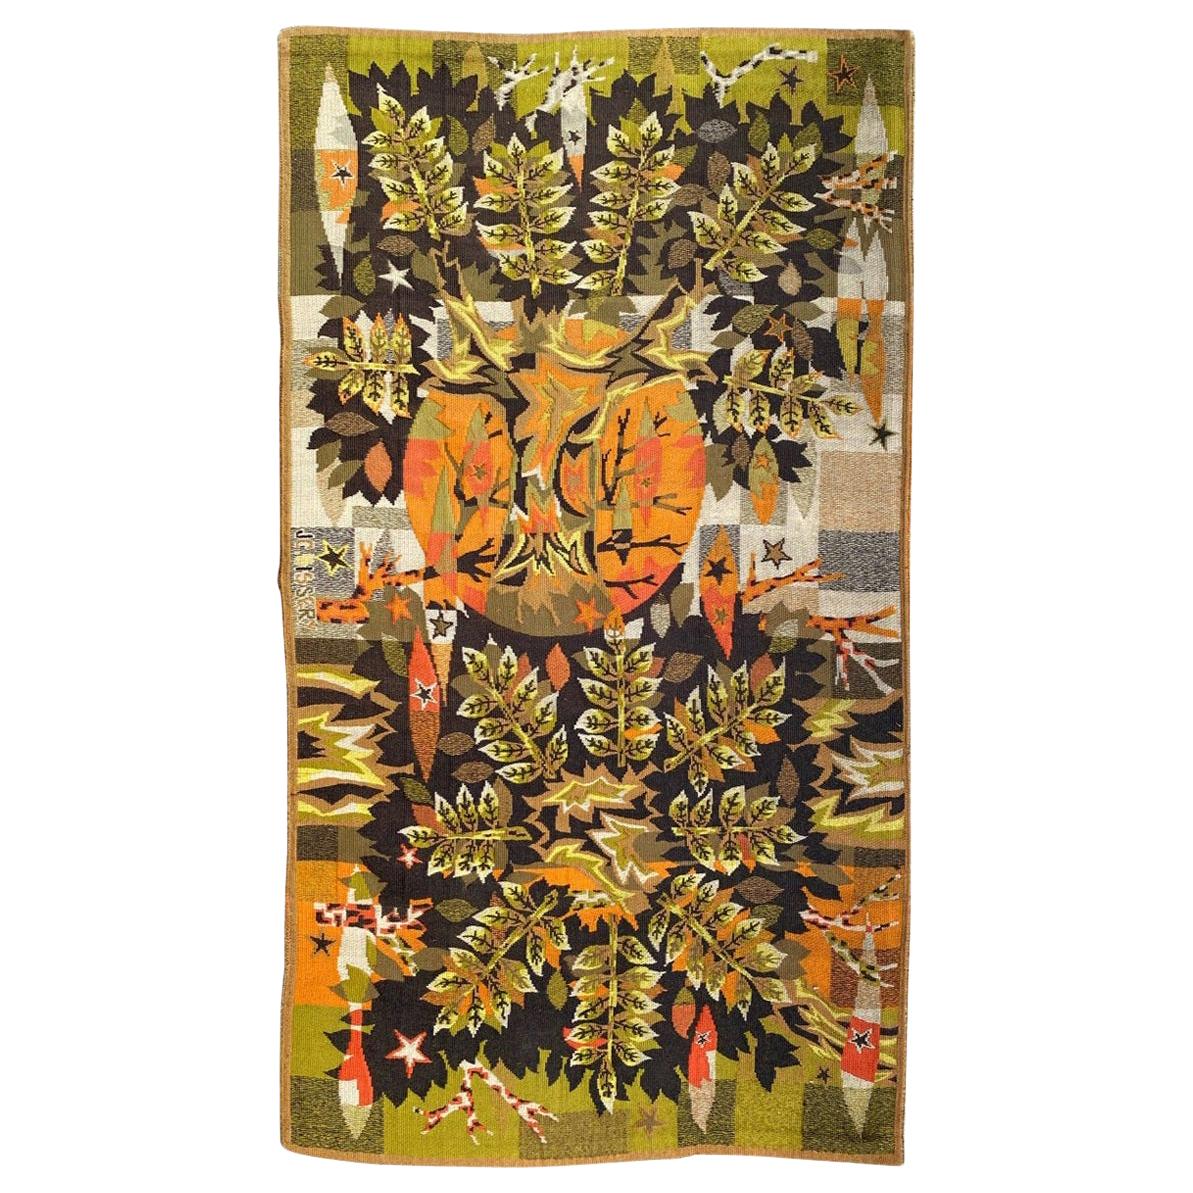 Bobyrug’s Nice Vintage Jaquar Tapestry with a Modern Jean Claude Bissery Design